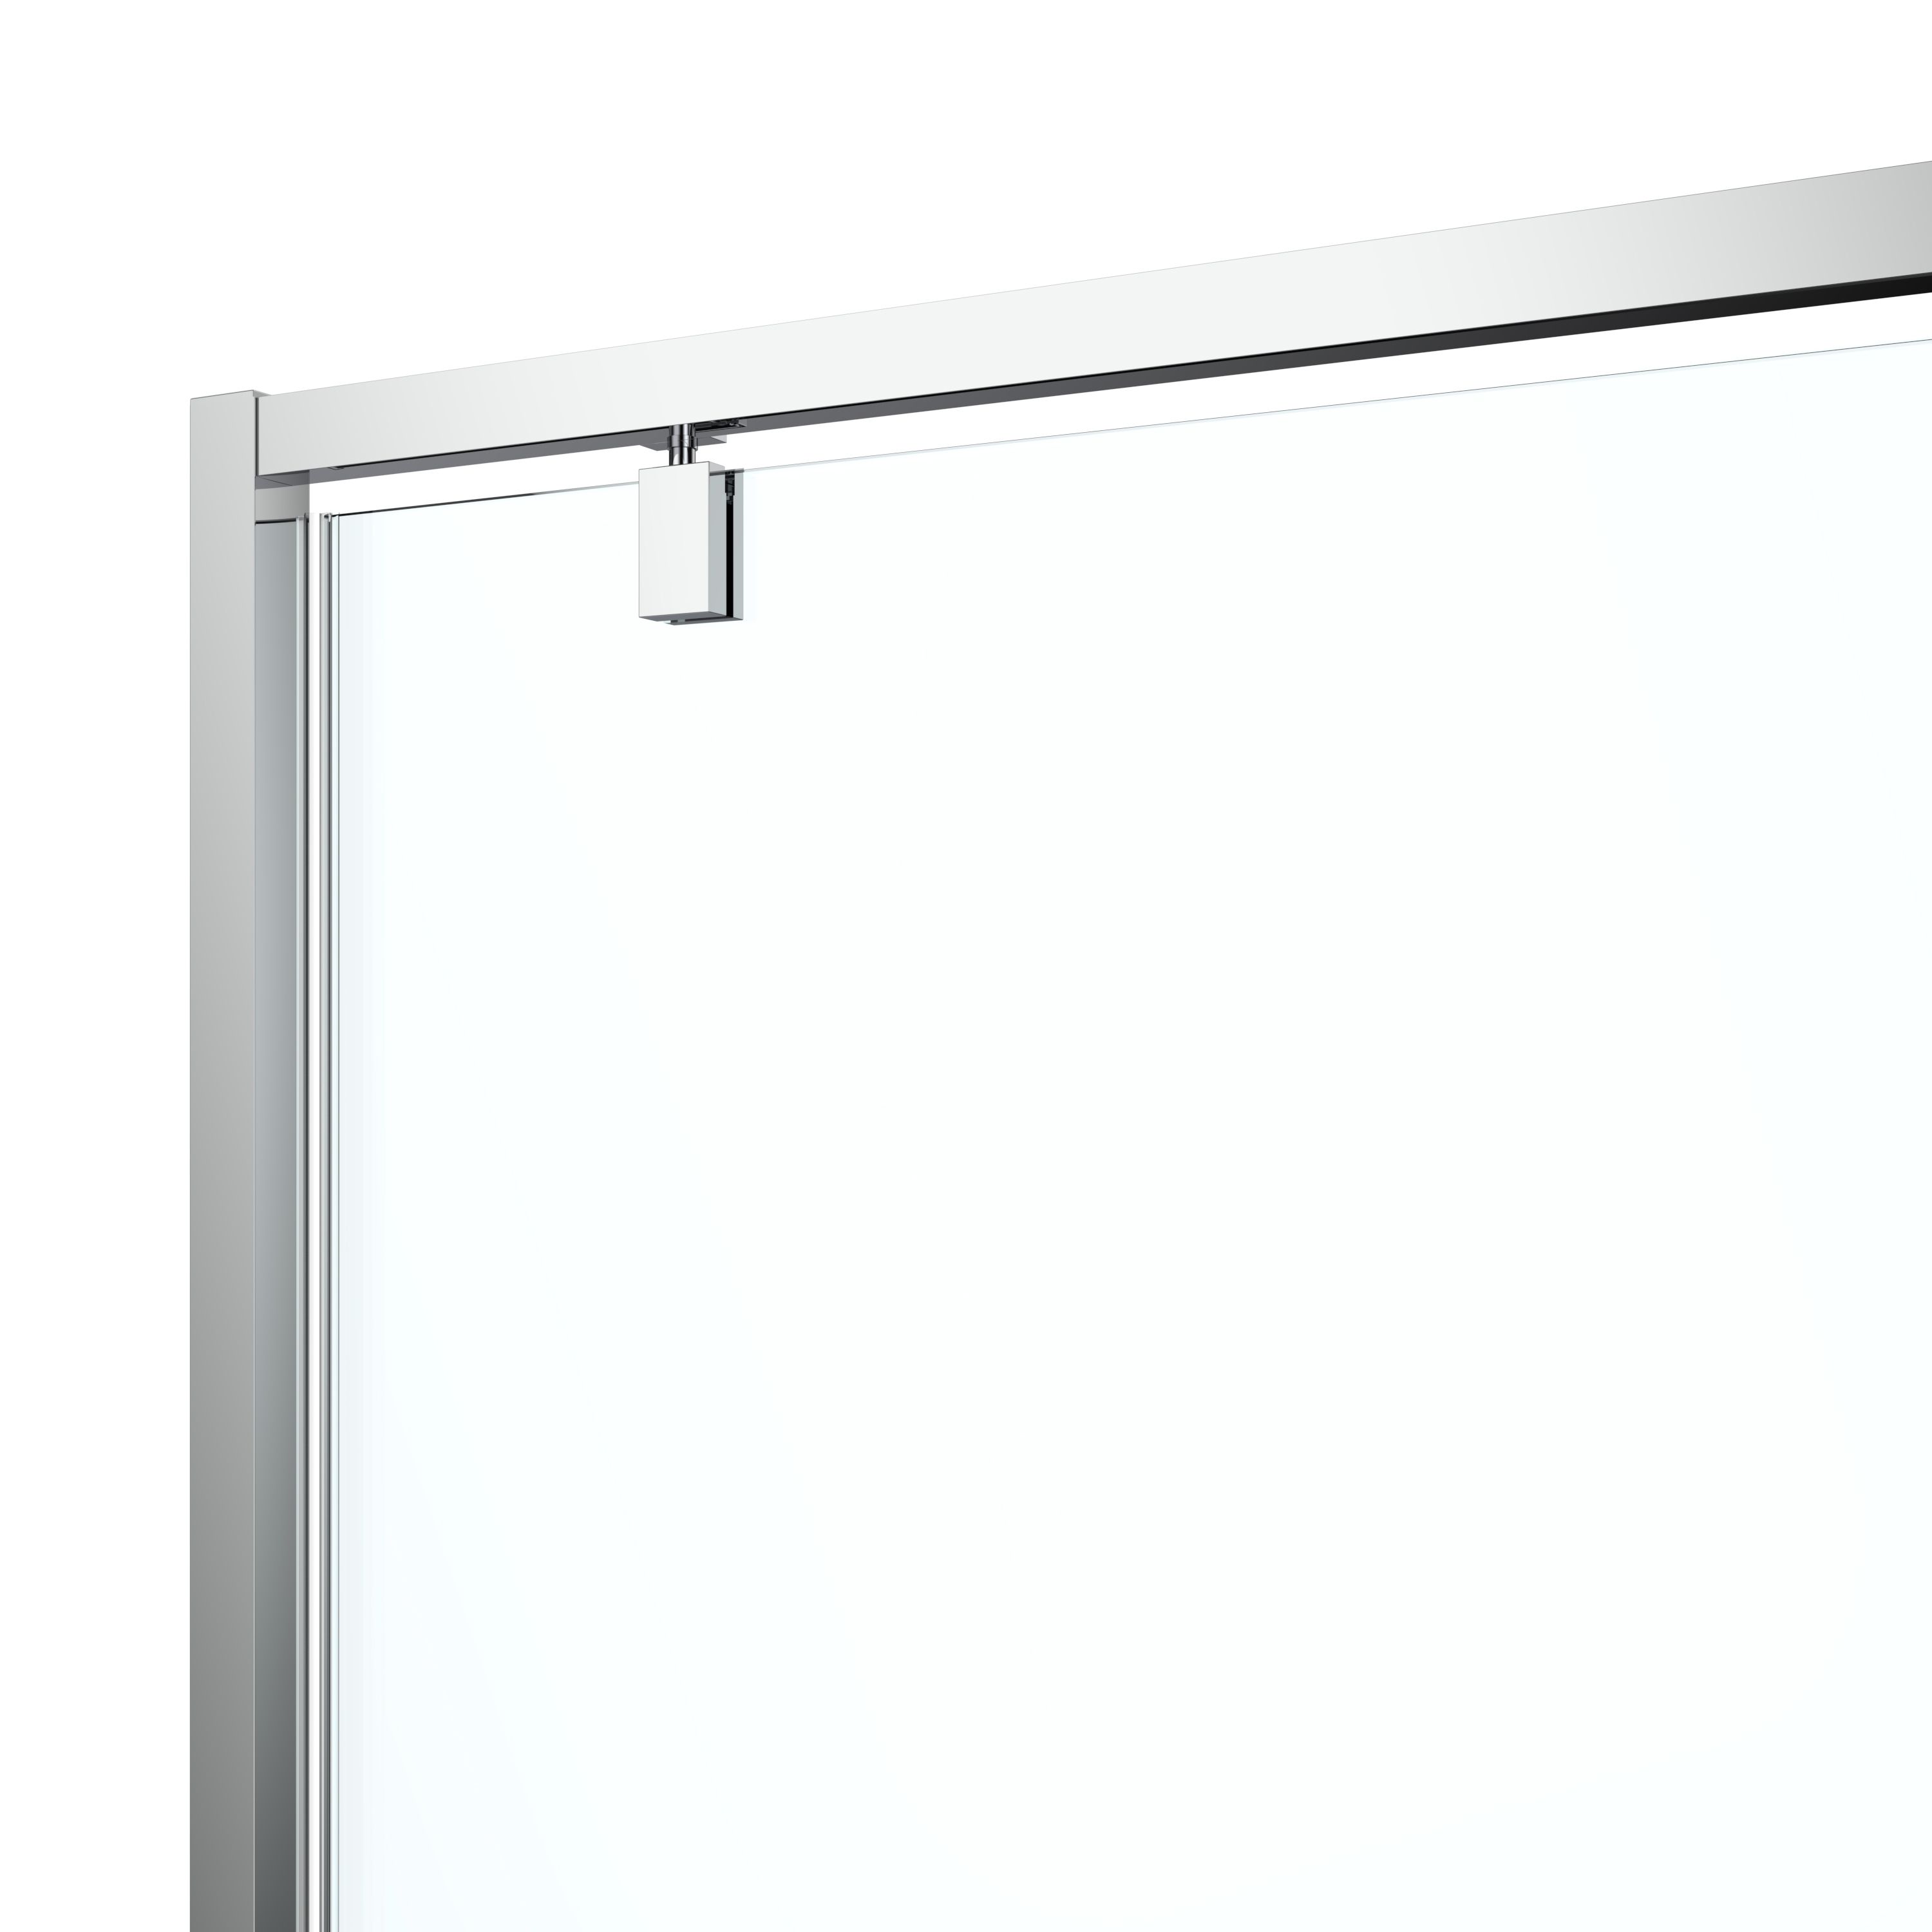 GoodHome Ledava Minimal frame Chrome effect Clear glass Half open pivot Shower Door (H)195cm (W)76cm